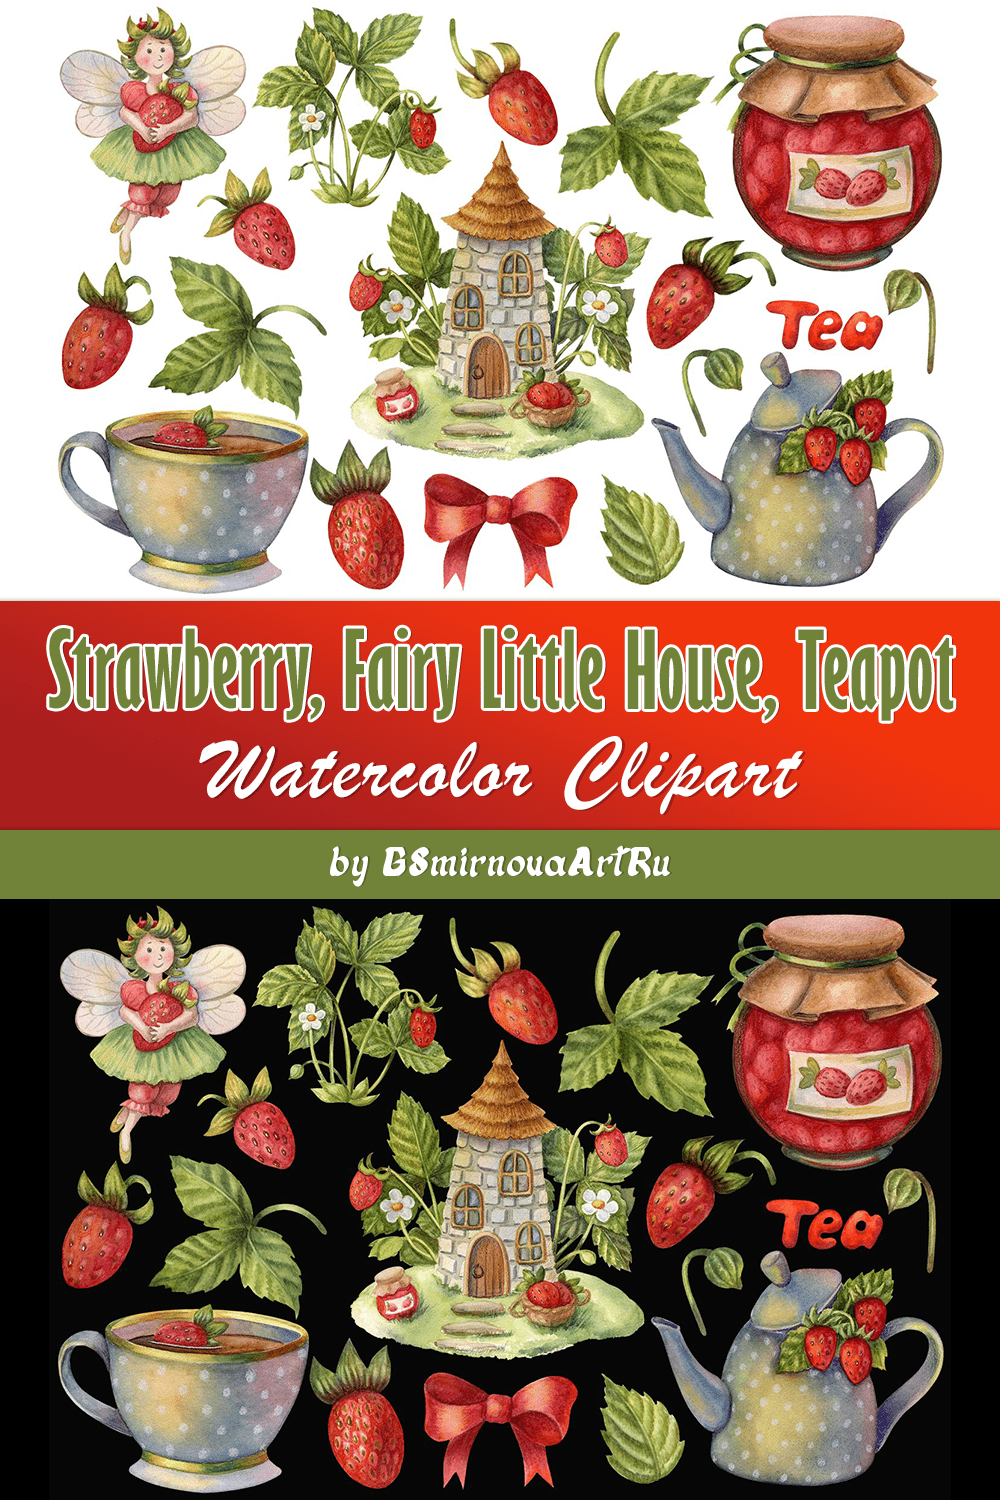 Strawberry, Watercolor Clipart, Fairy Little House, Teapot - Pinterest.